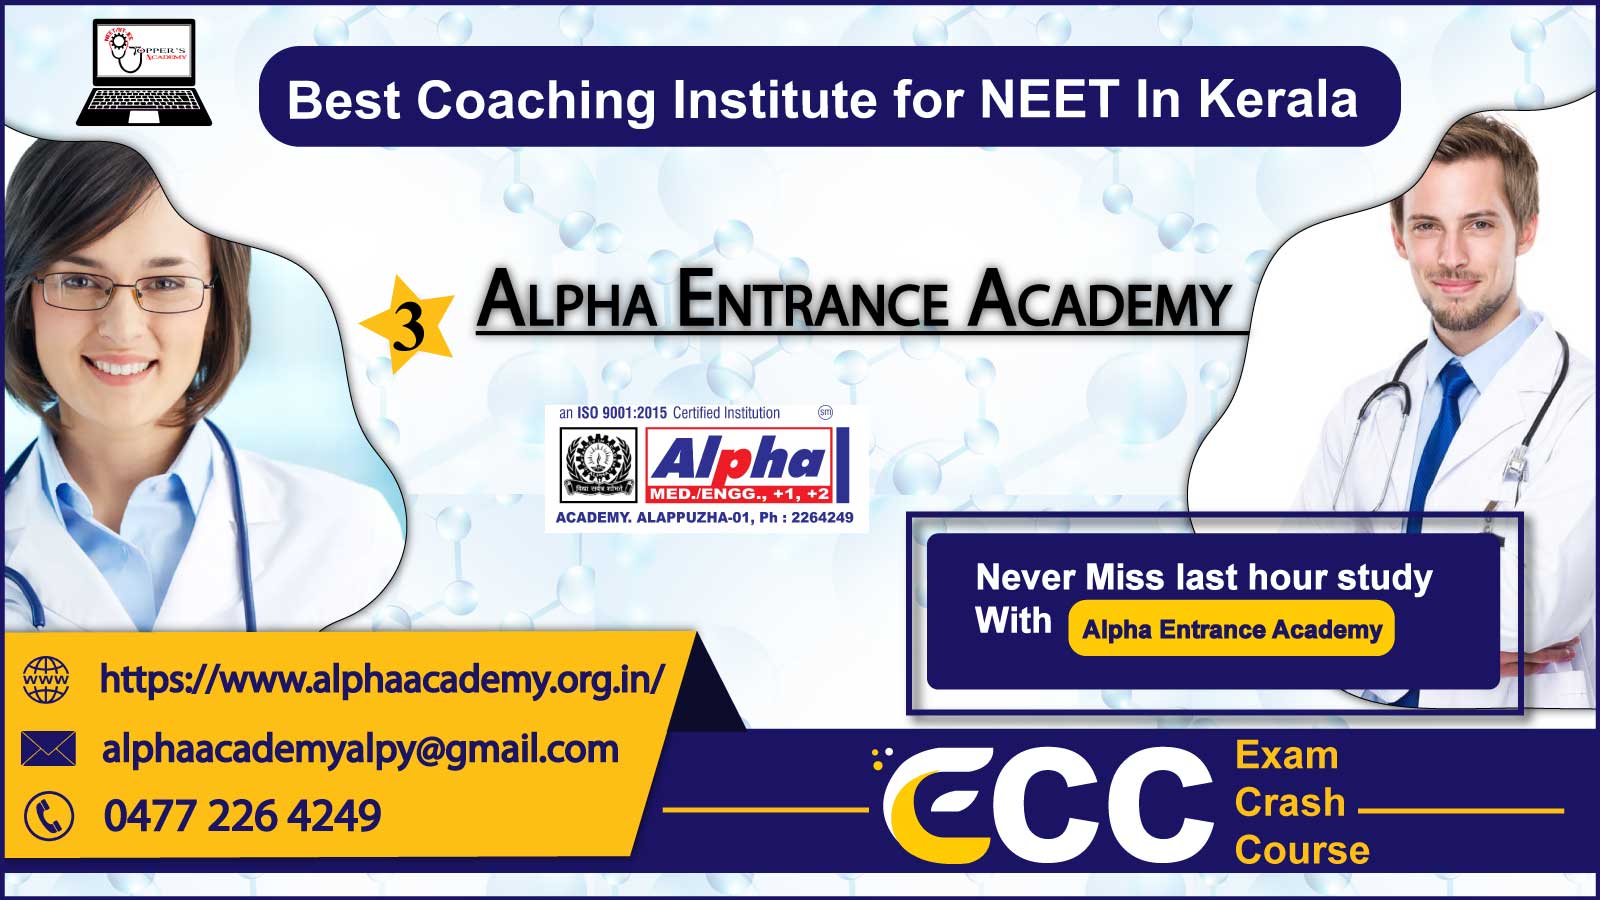 Alpha Entrance Academy NEET Coaching In Kerala